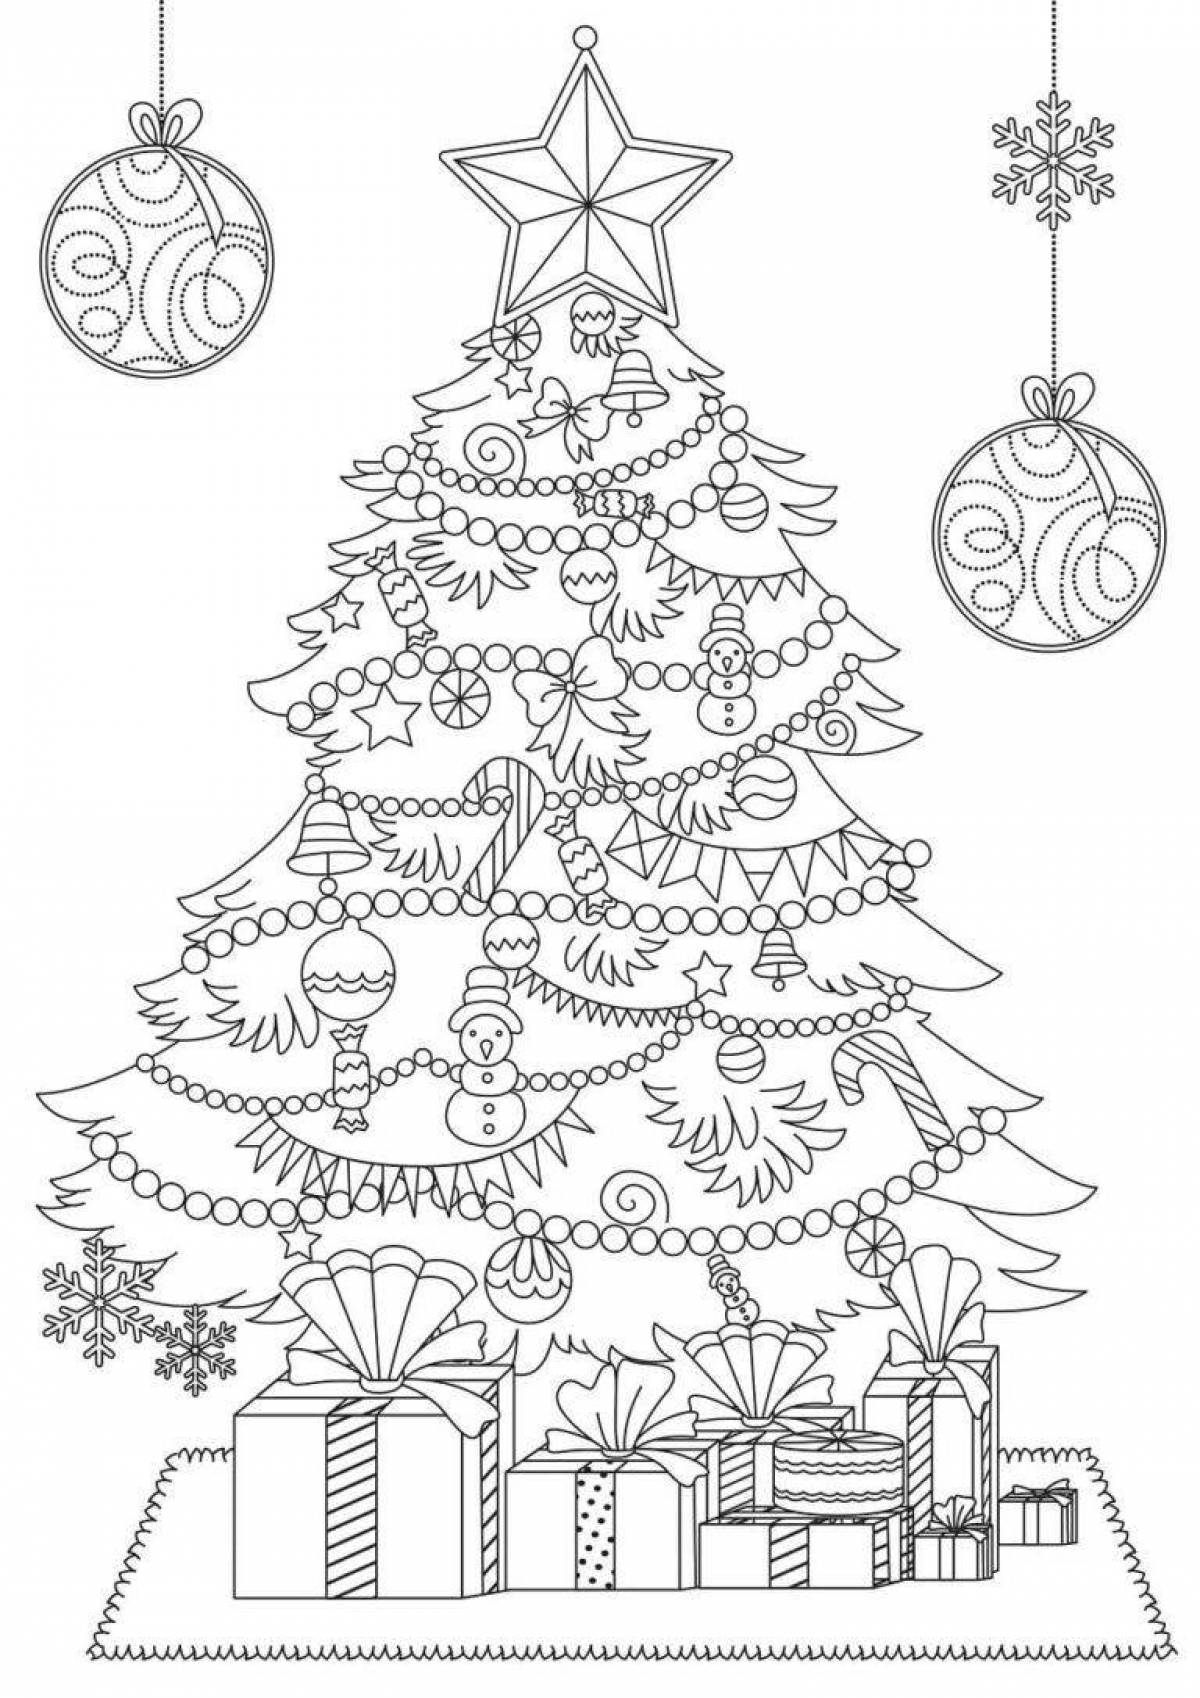 Playful Christmas tree coloring book